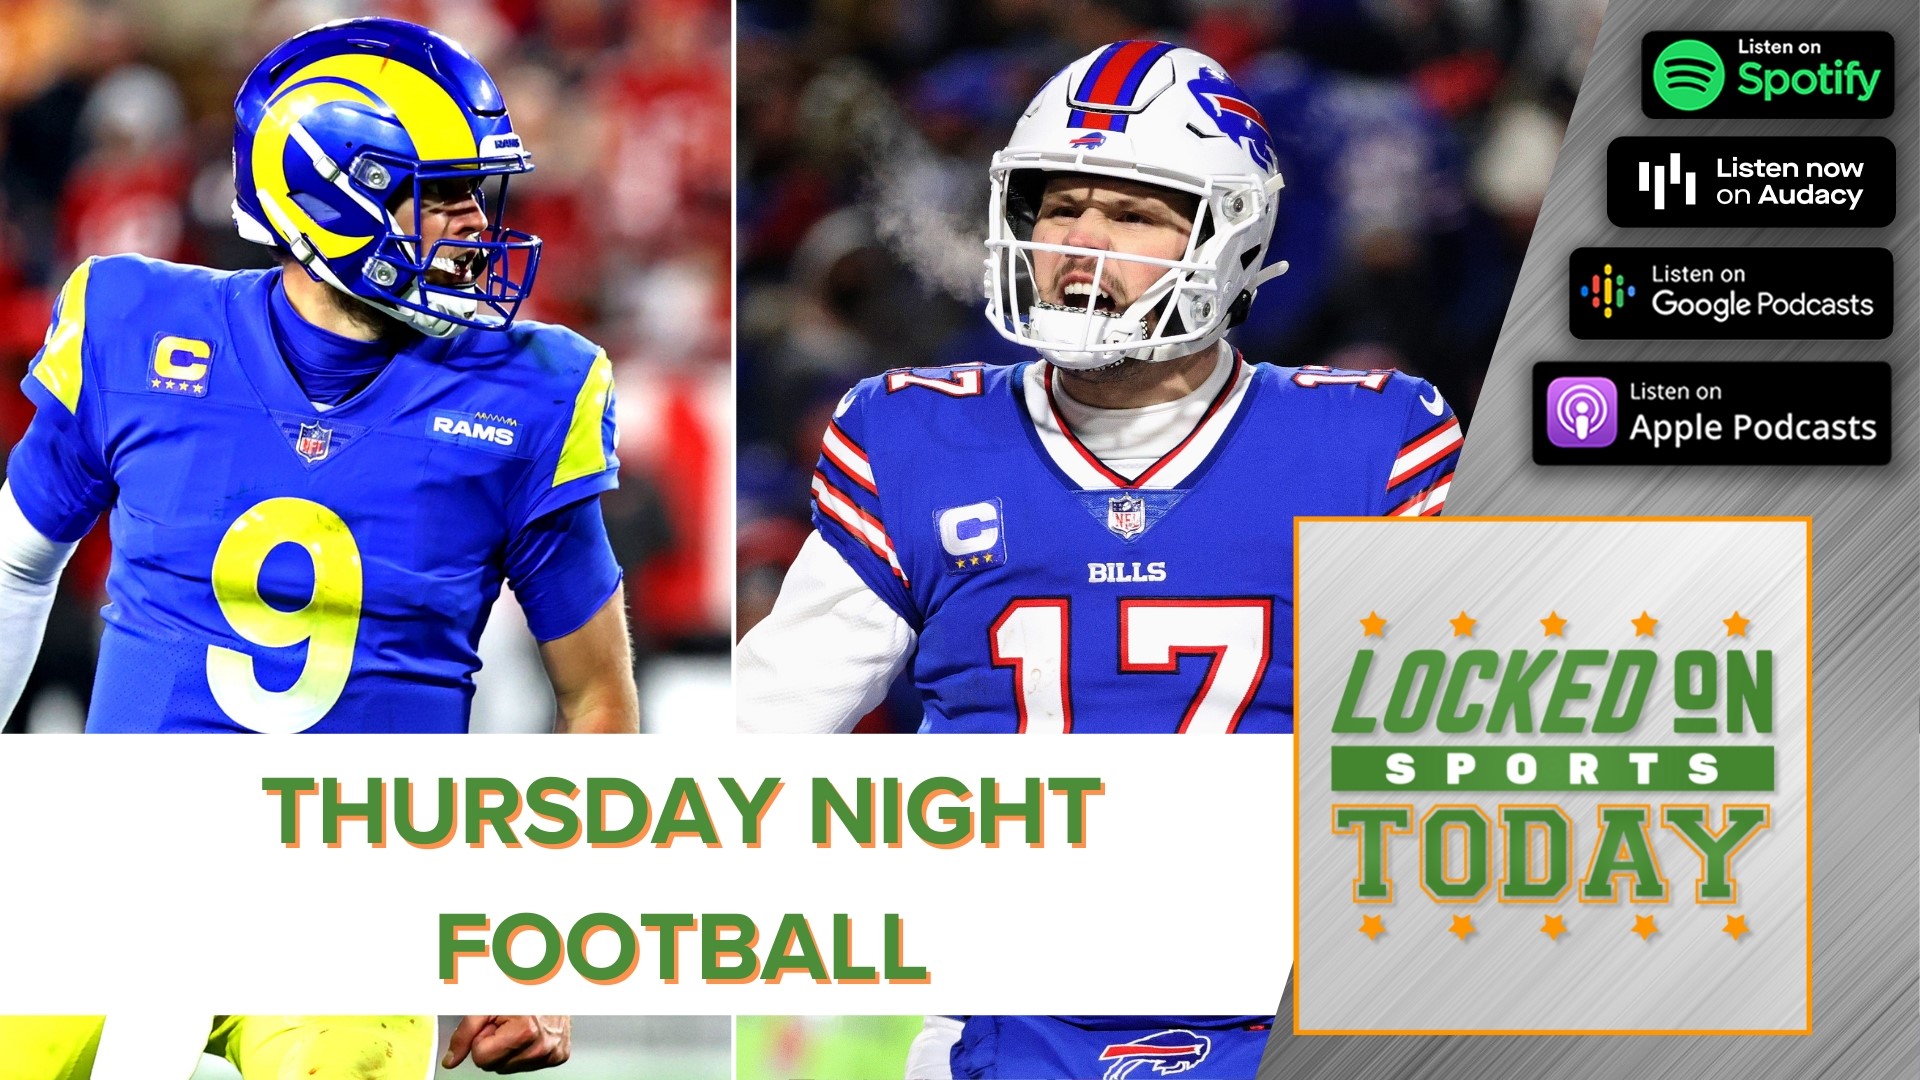 Thursday night football schedule: Bills-Rams kickoff 2022 NFL season